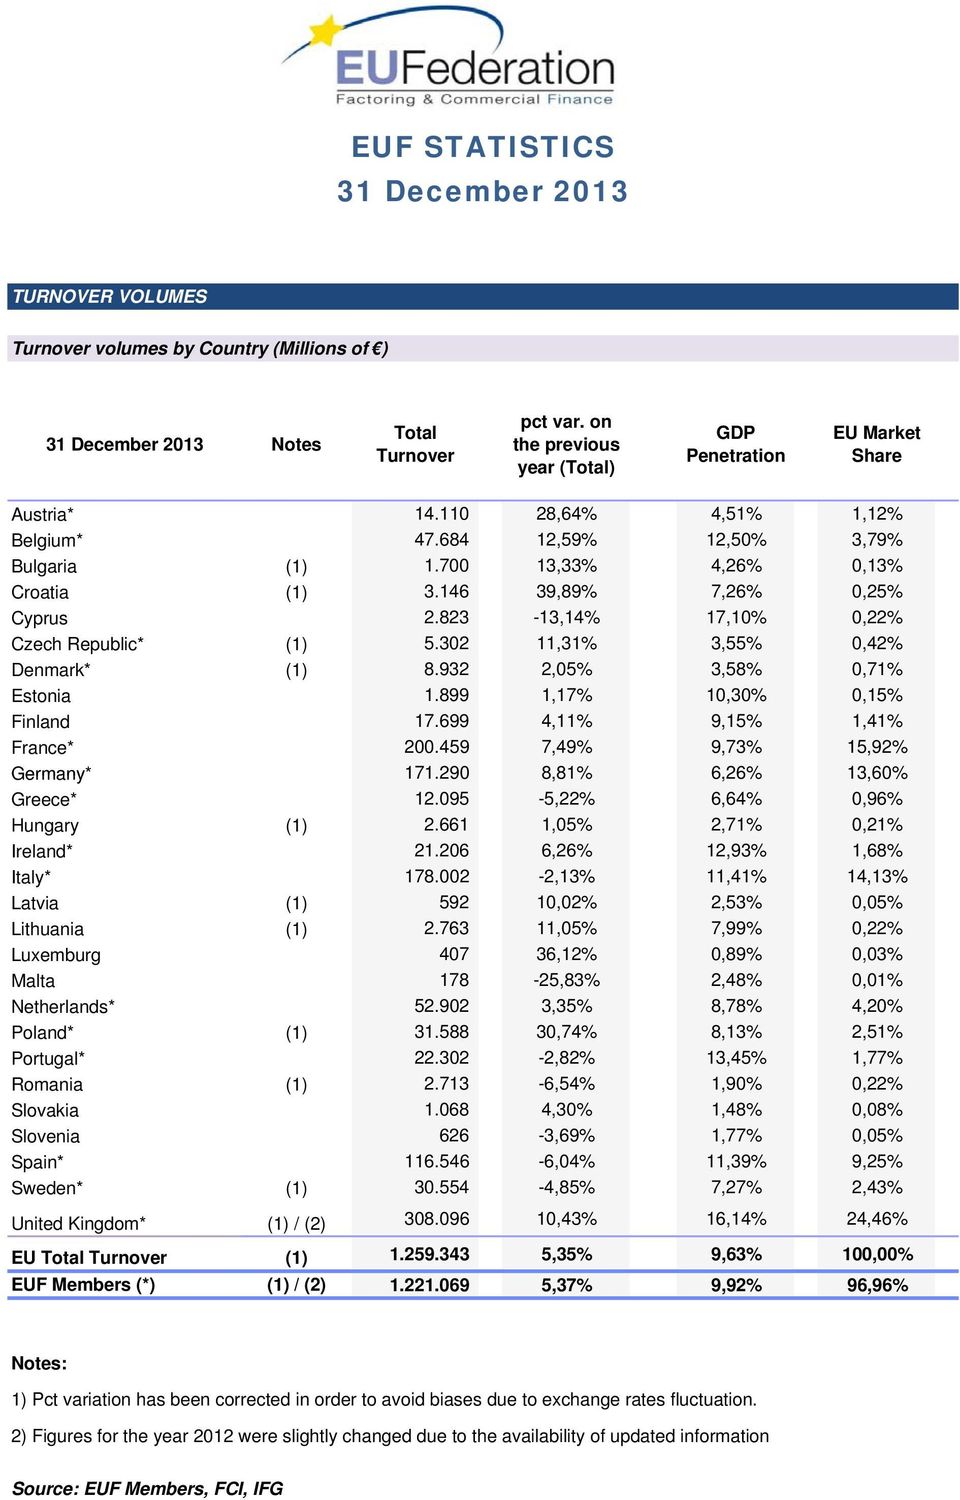 932 2,05% 3,58% 0,7% Estonia.899,7% 0,30% 0,5% Finland 7.699 4,% 9,5%,4% France* 200.459 7,49% 9,73% 5,92% Germany* 7.290 8,8% 8% 6,26% 3,60% Greece* 2.095-5,22% 6,64% 0,96% Hungary () 2.